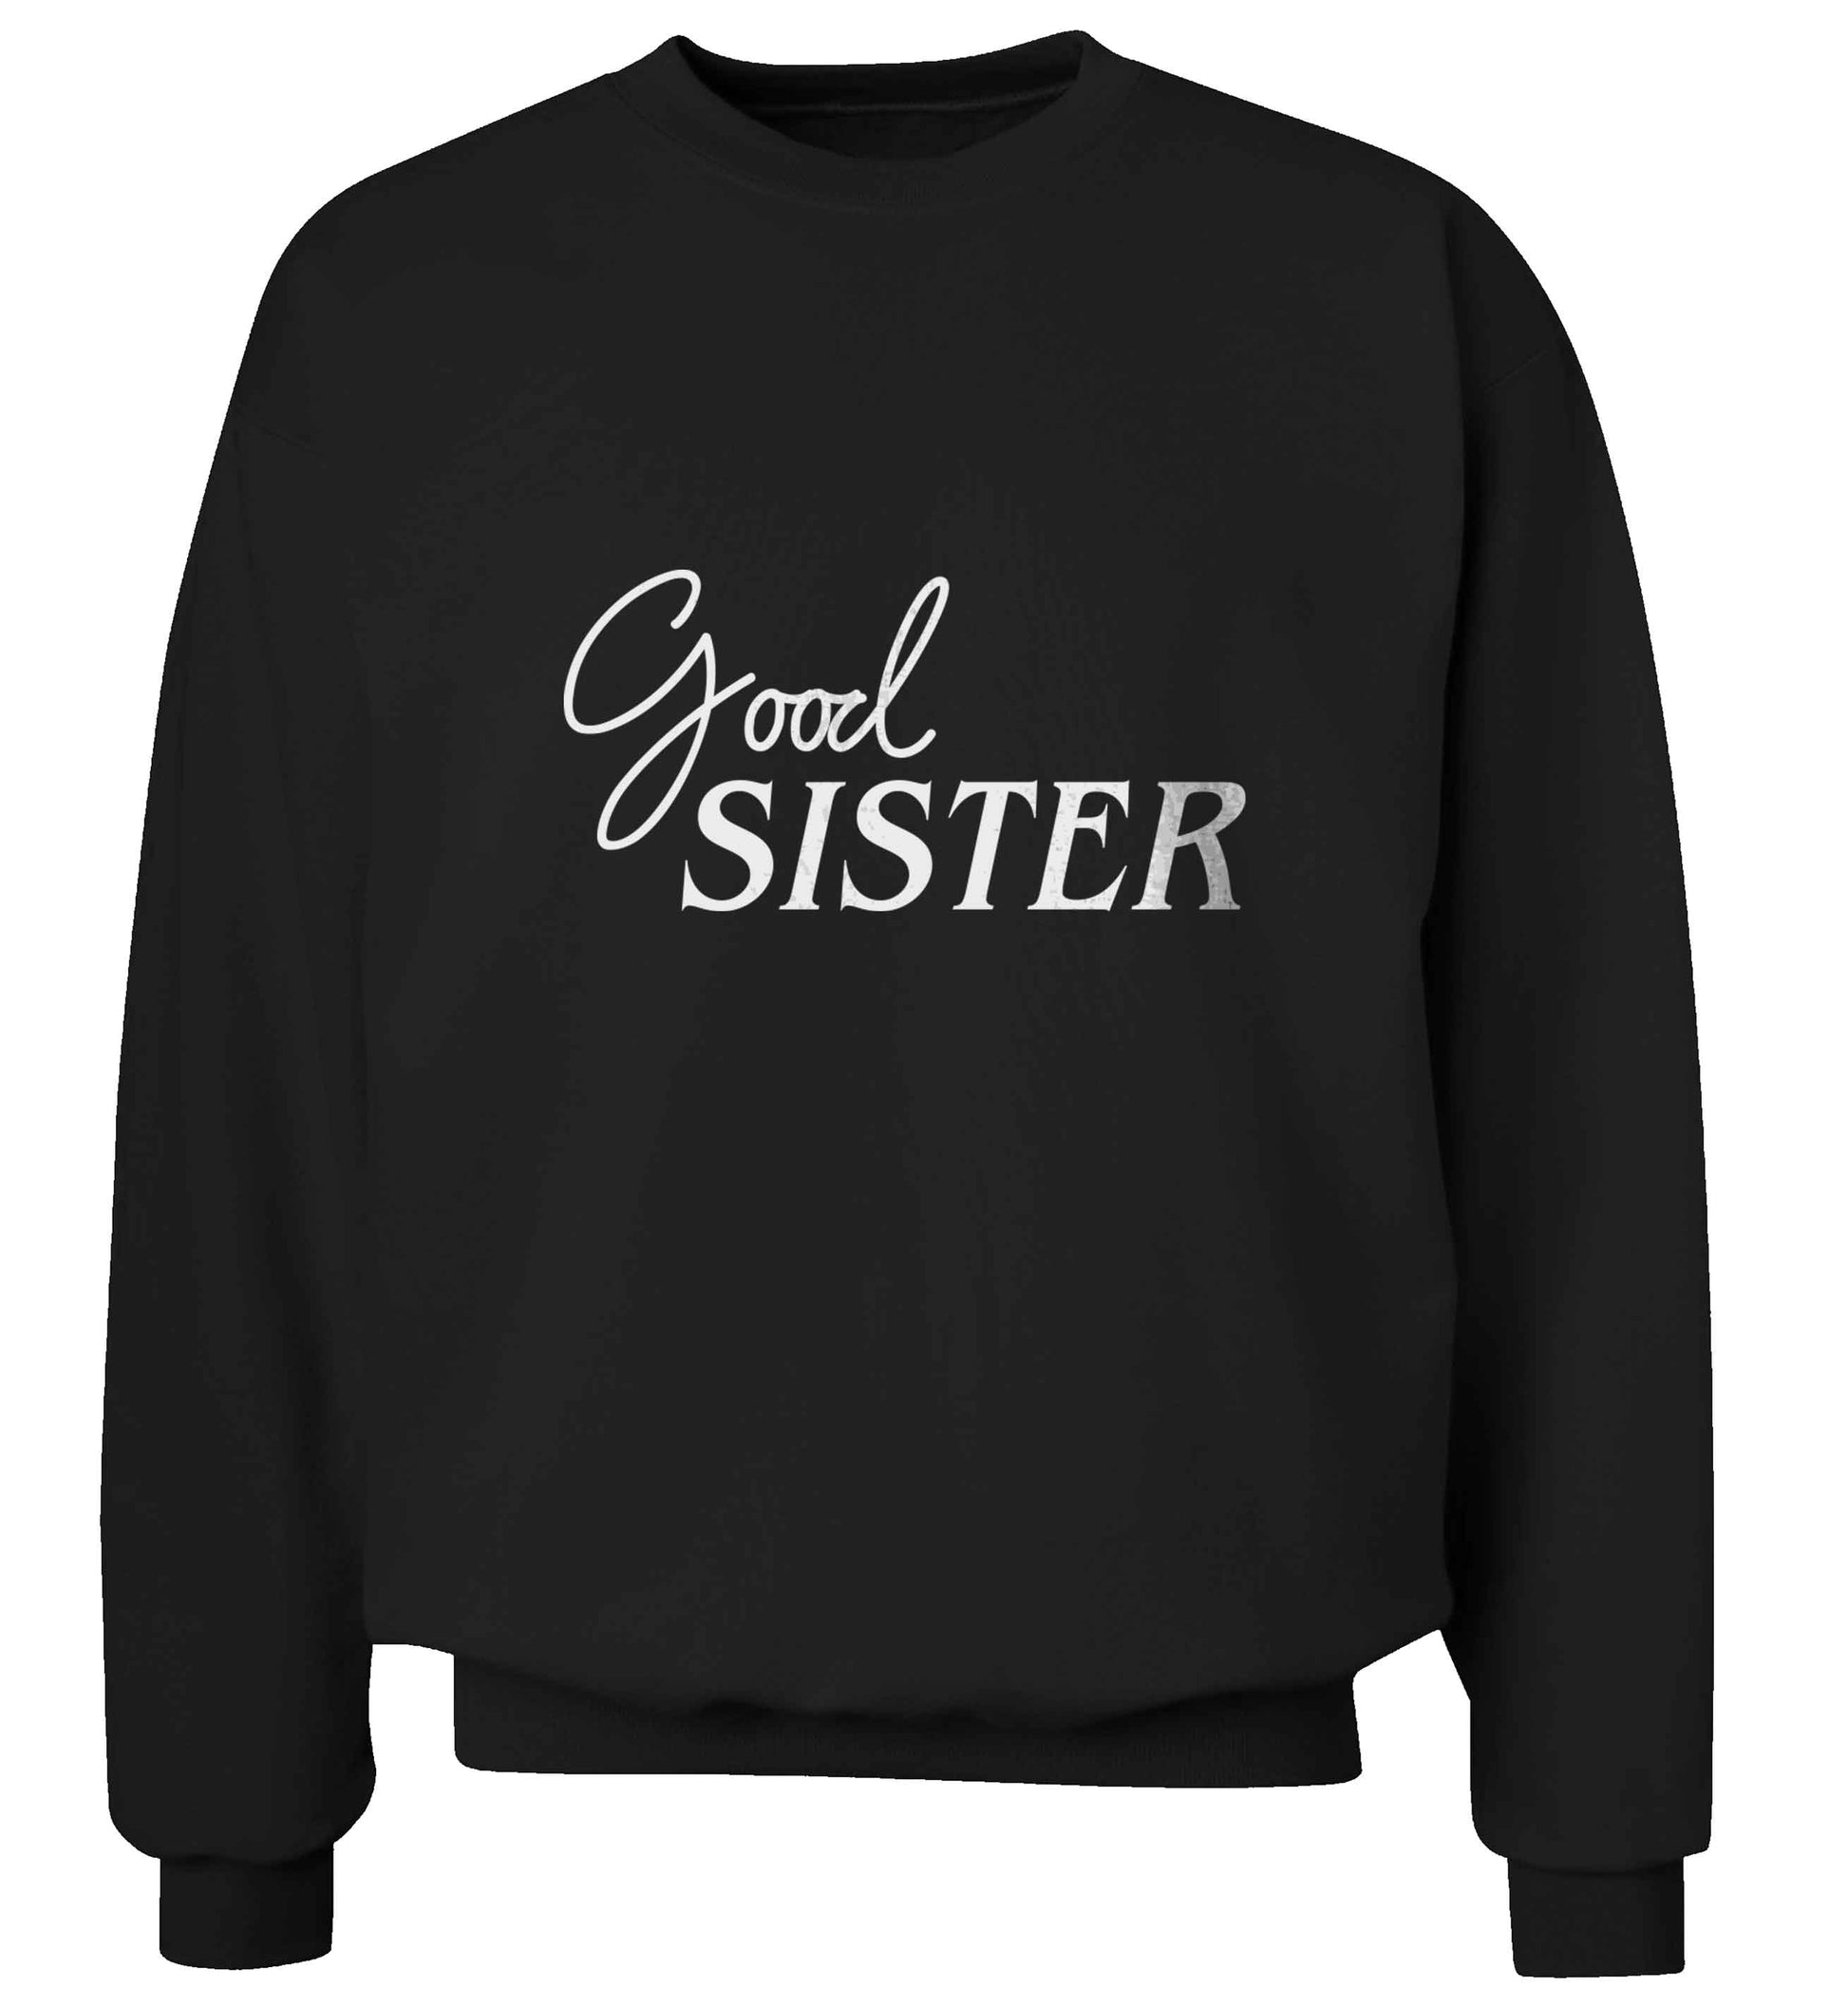 Good sister adult's unisex black sweater 2XL